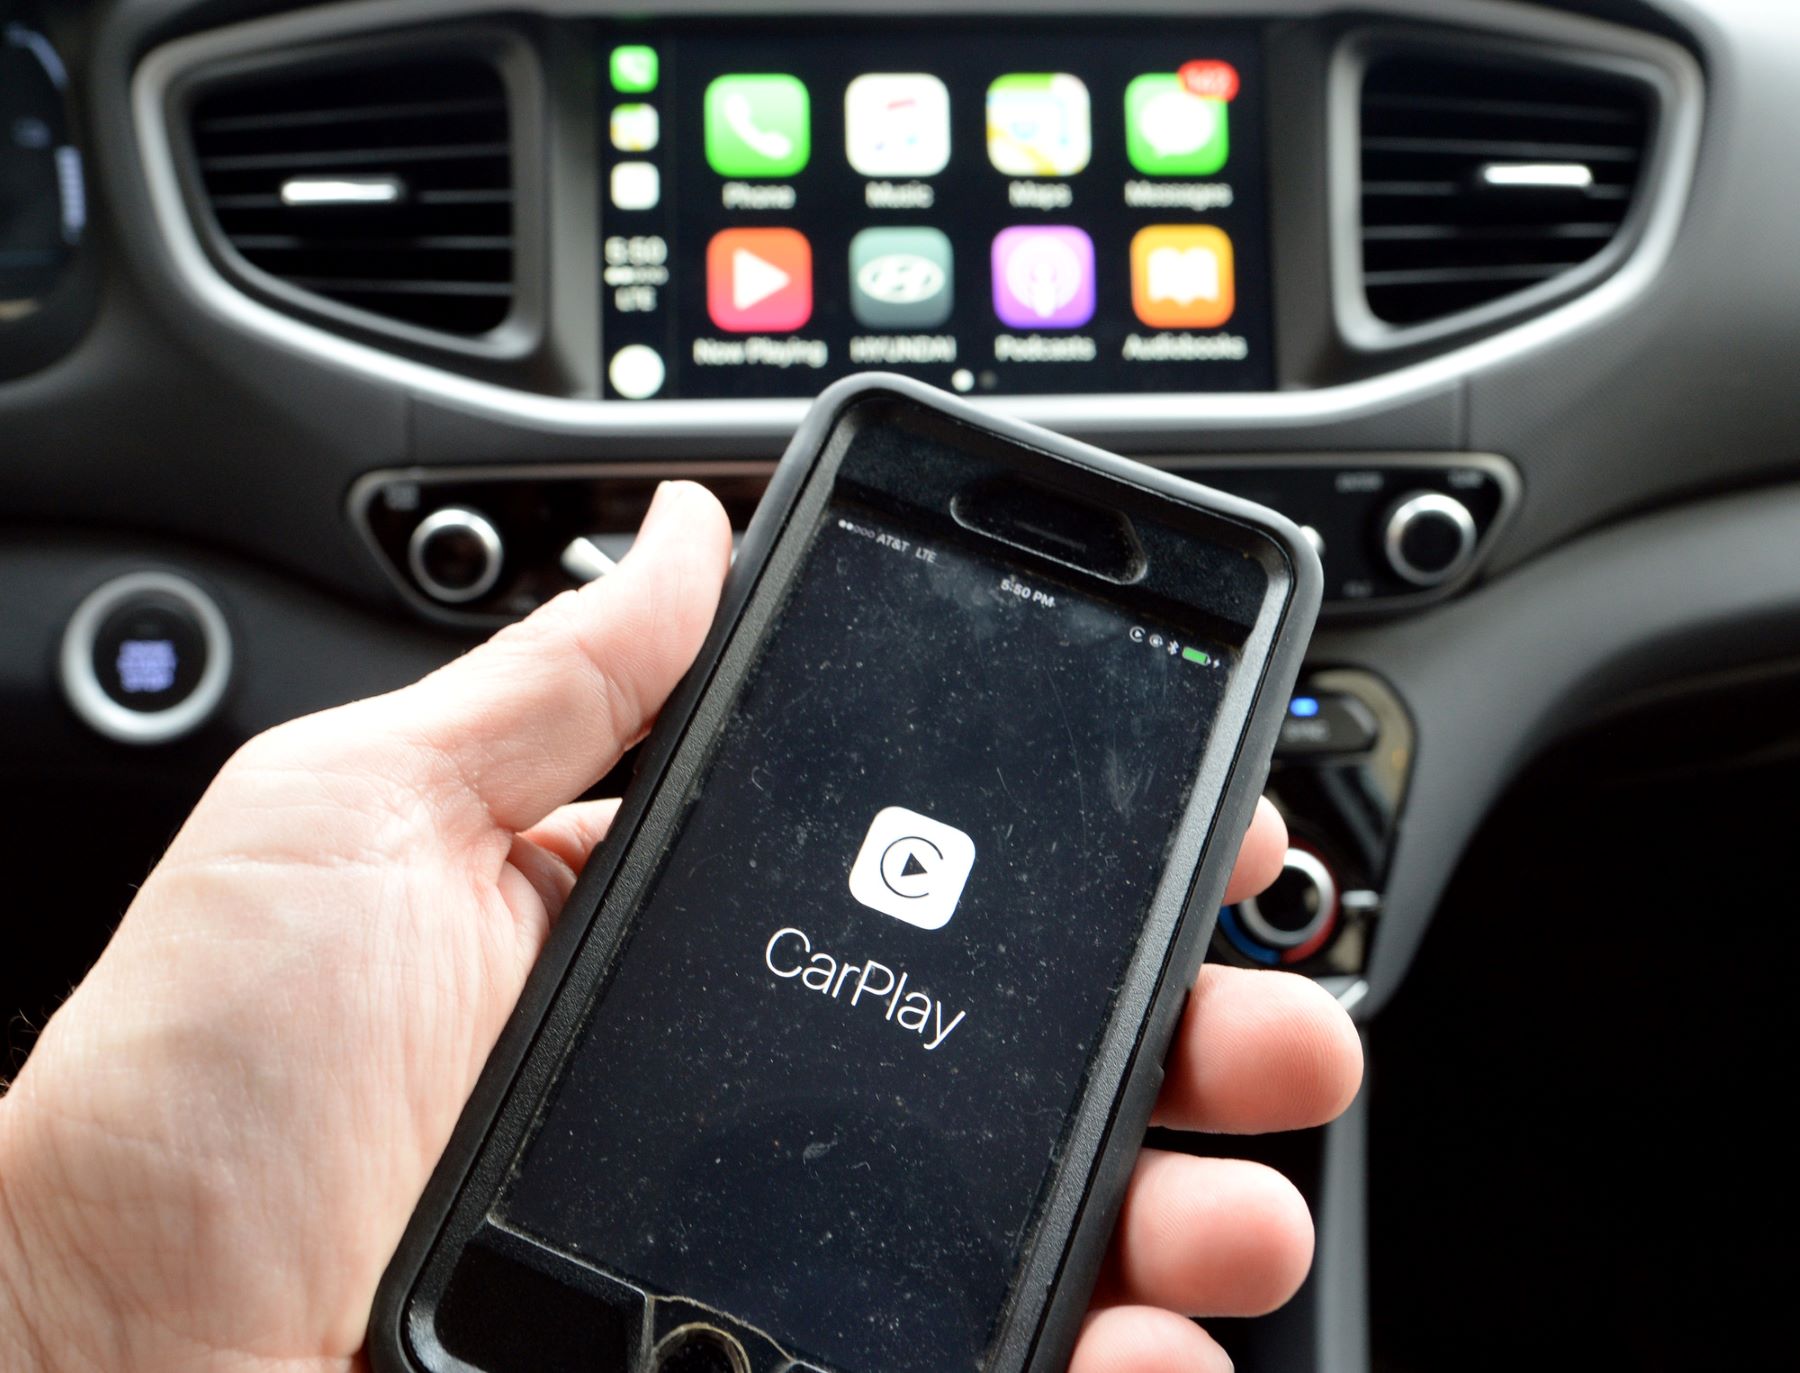 Apple CarPlay is being used through an iPhone smartphone in a 2017 Hyundai Ioniq